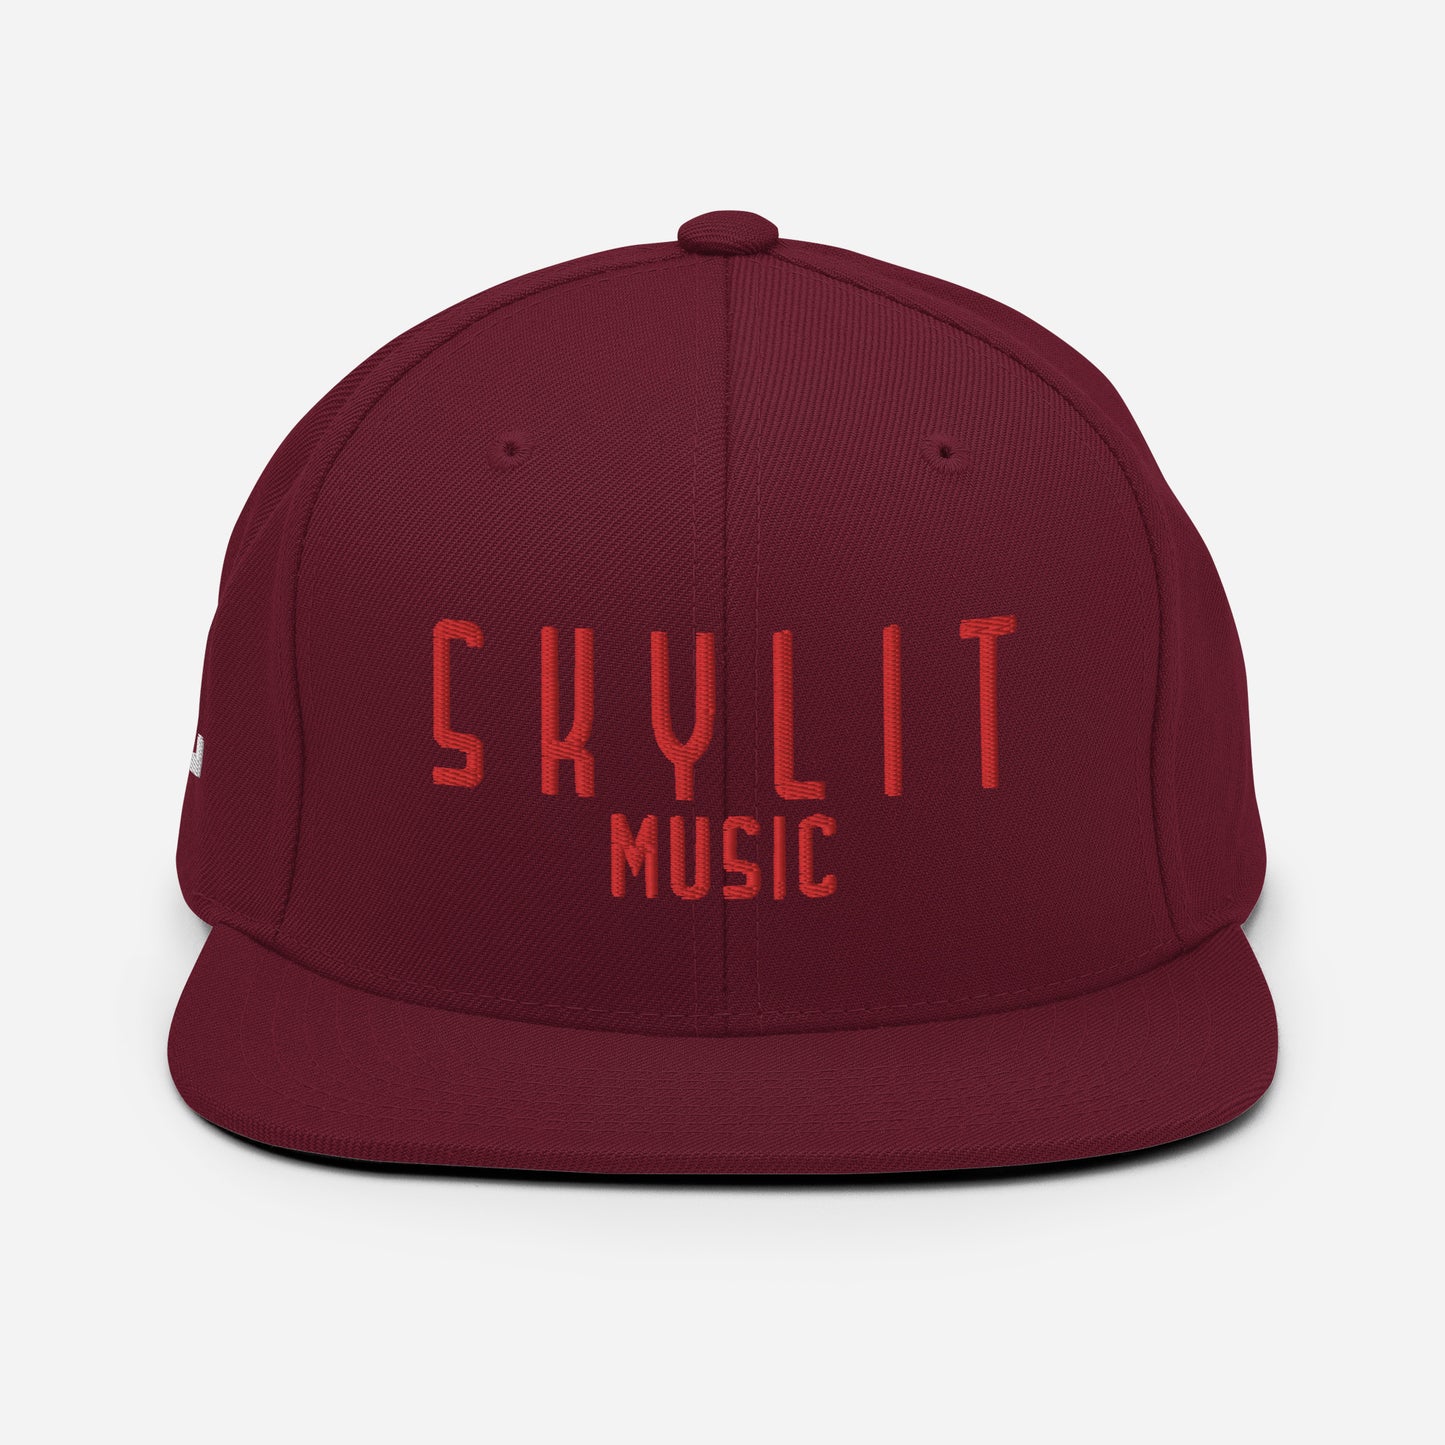 Skylit Music Snapback Hat